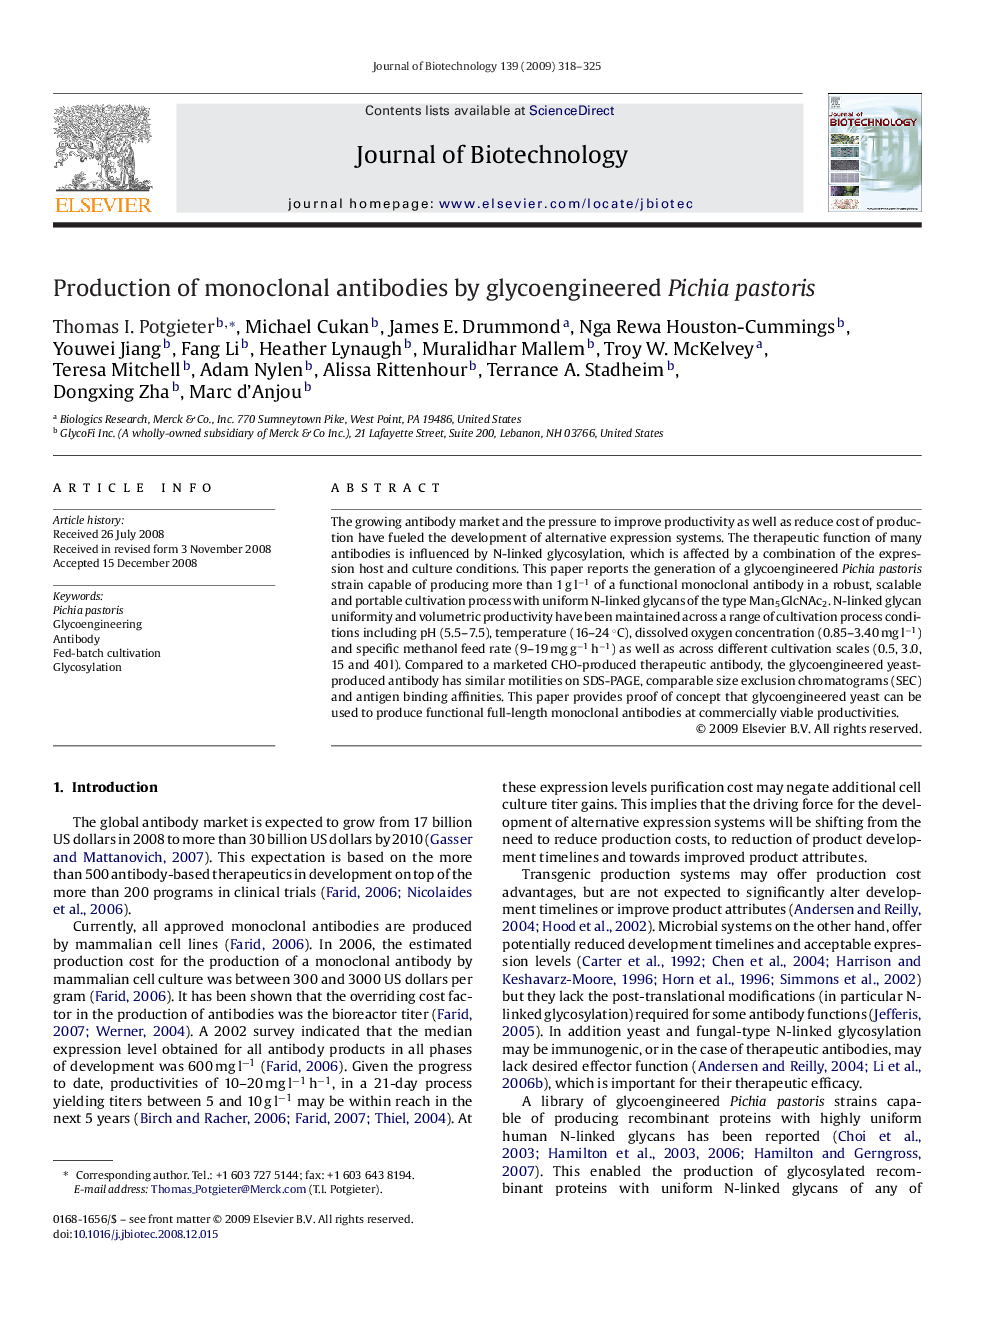 Production of monoclonal antibodies by glycoengineered Pichia pastoris